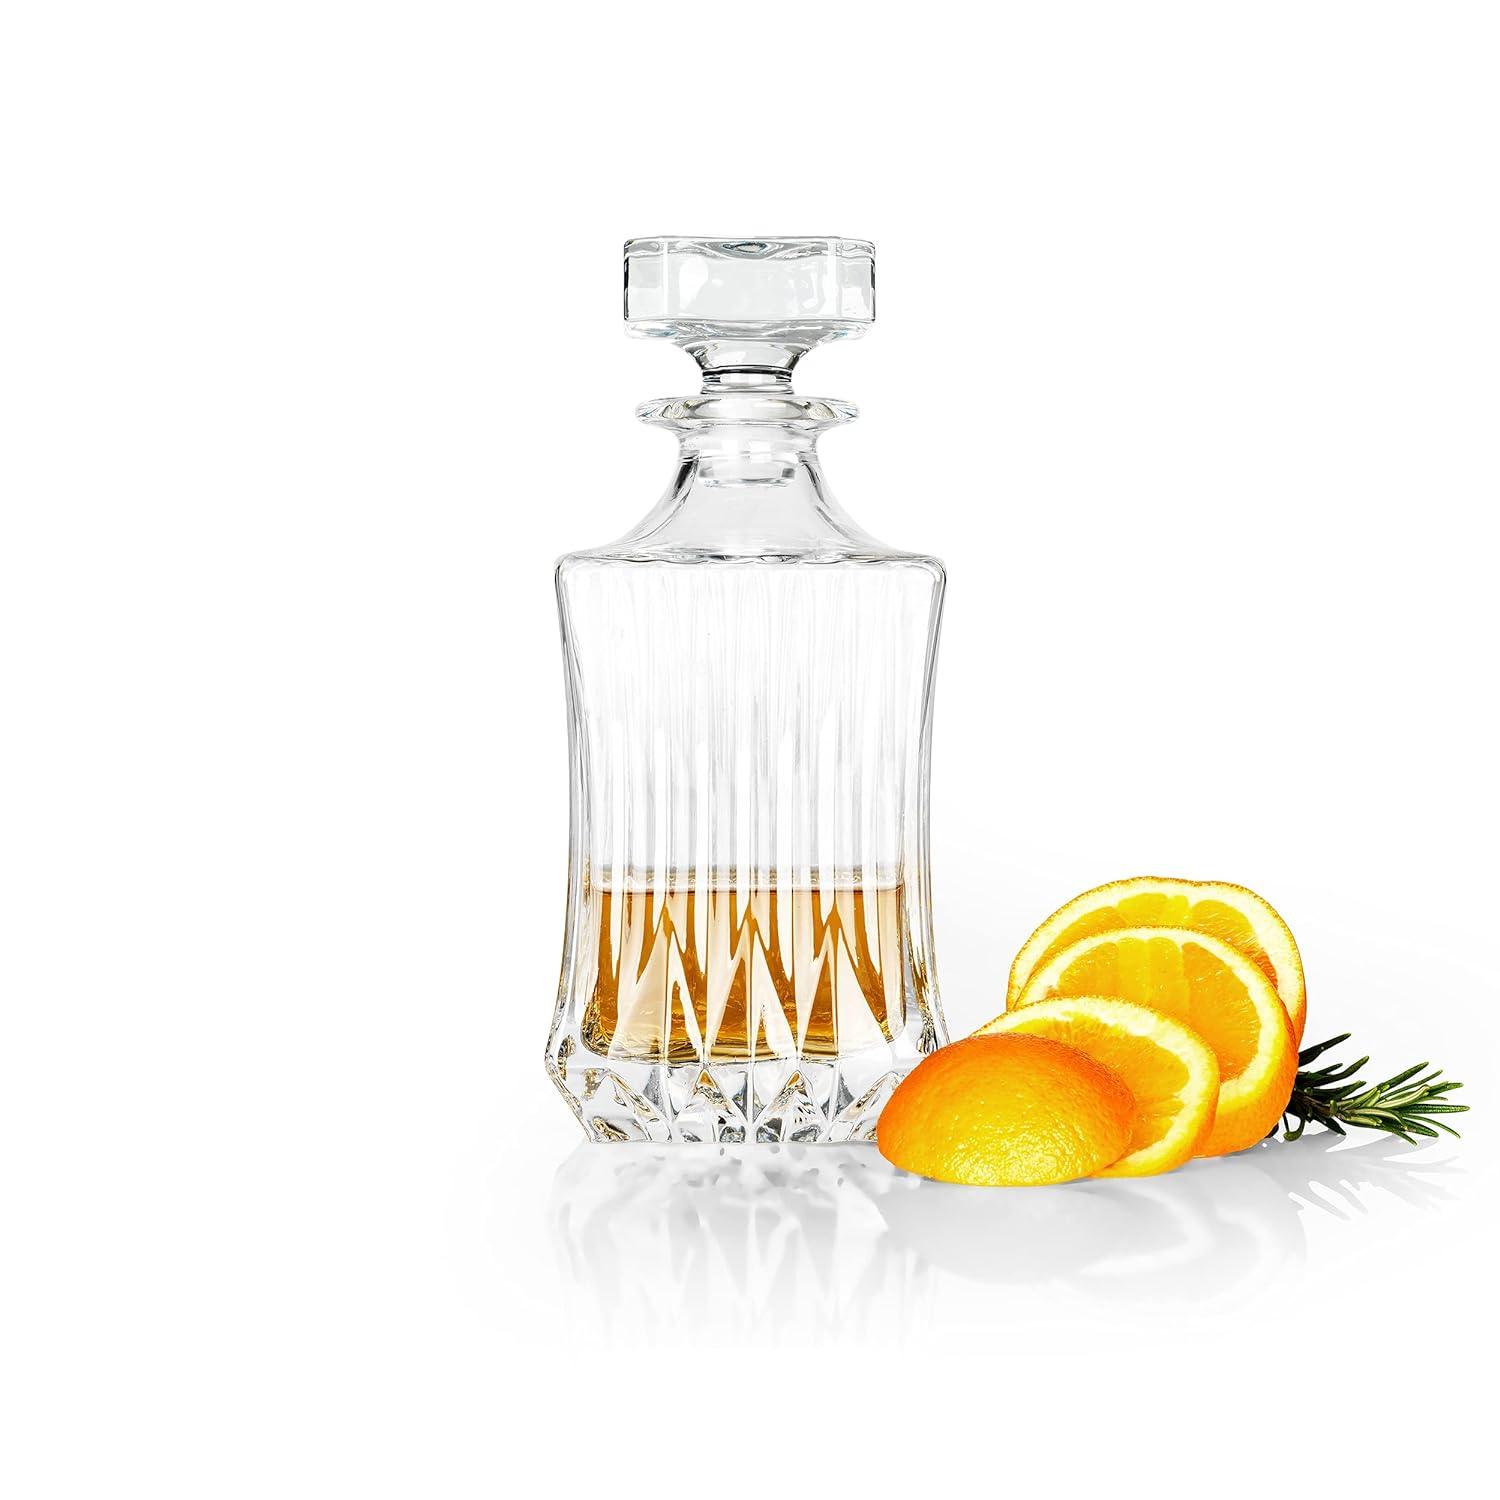 Adagio Premium Crystal Whiskey Decanter, Italy - Happyware Home Pvt Ltd